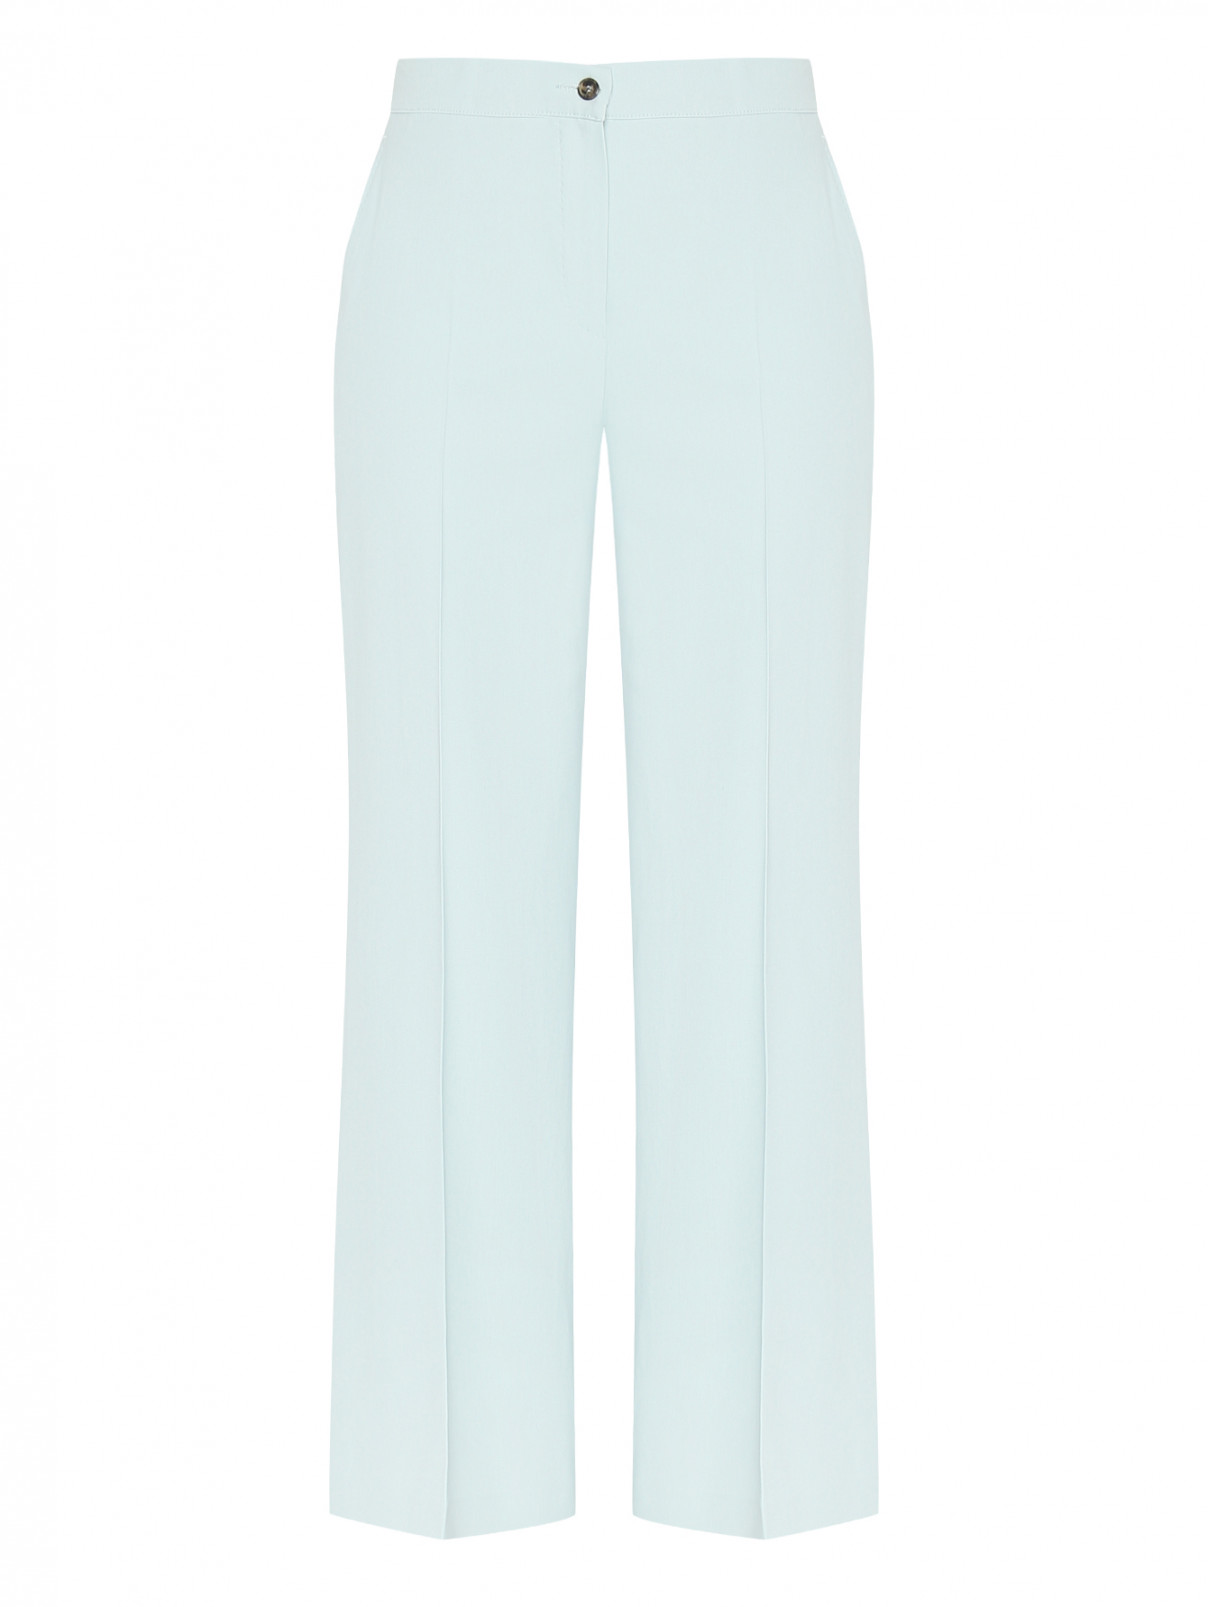 Широкие брюки с карманами Marina Rinaldi  –  Общий вид  – Цвет:  Синий